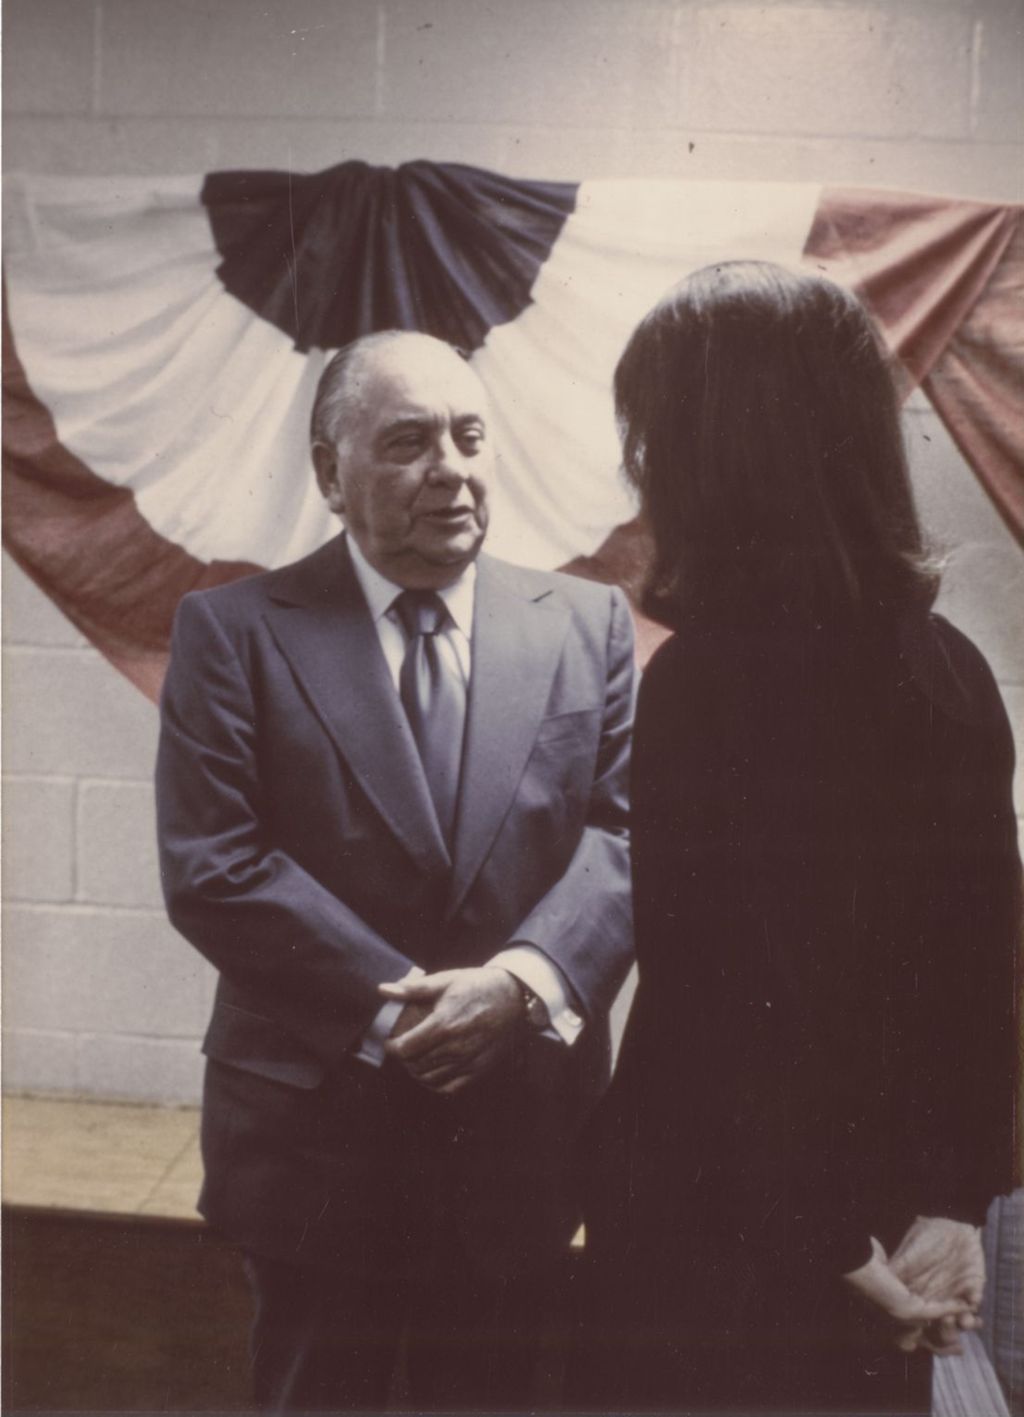 Miniature of Richard J. Daley with Jacqueline Onassis